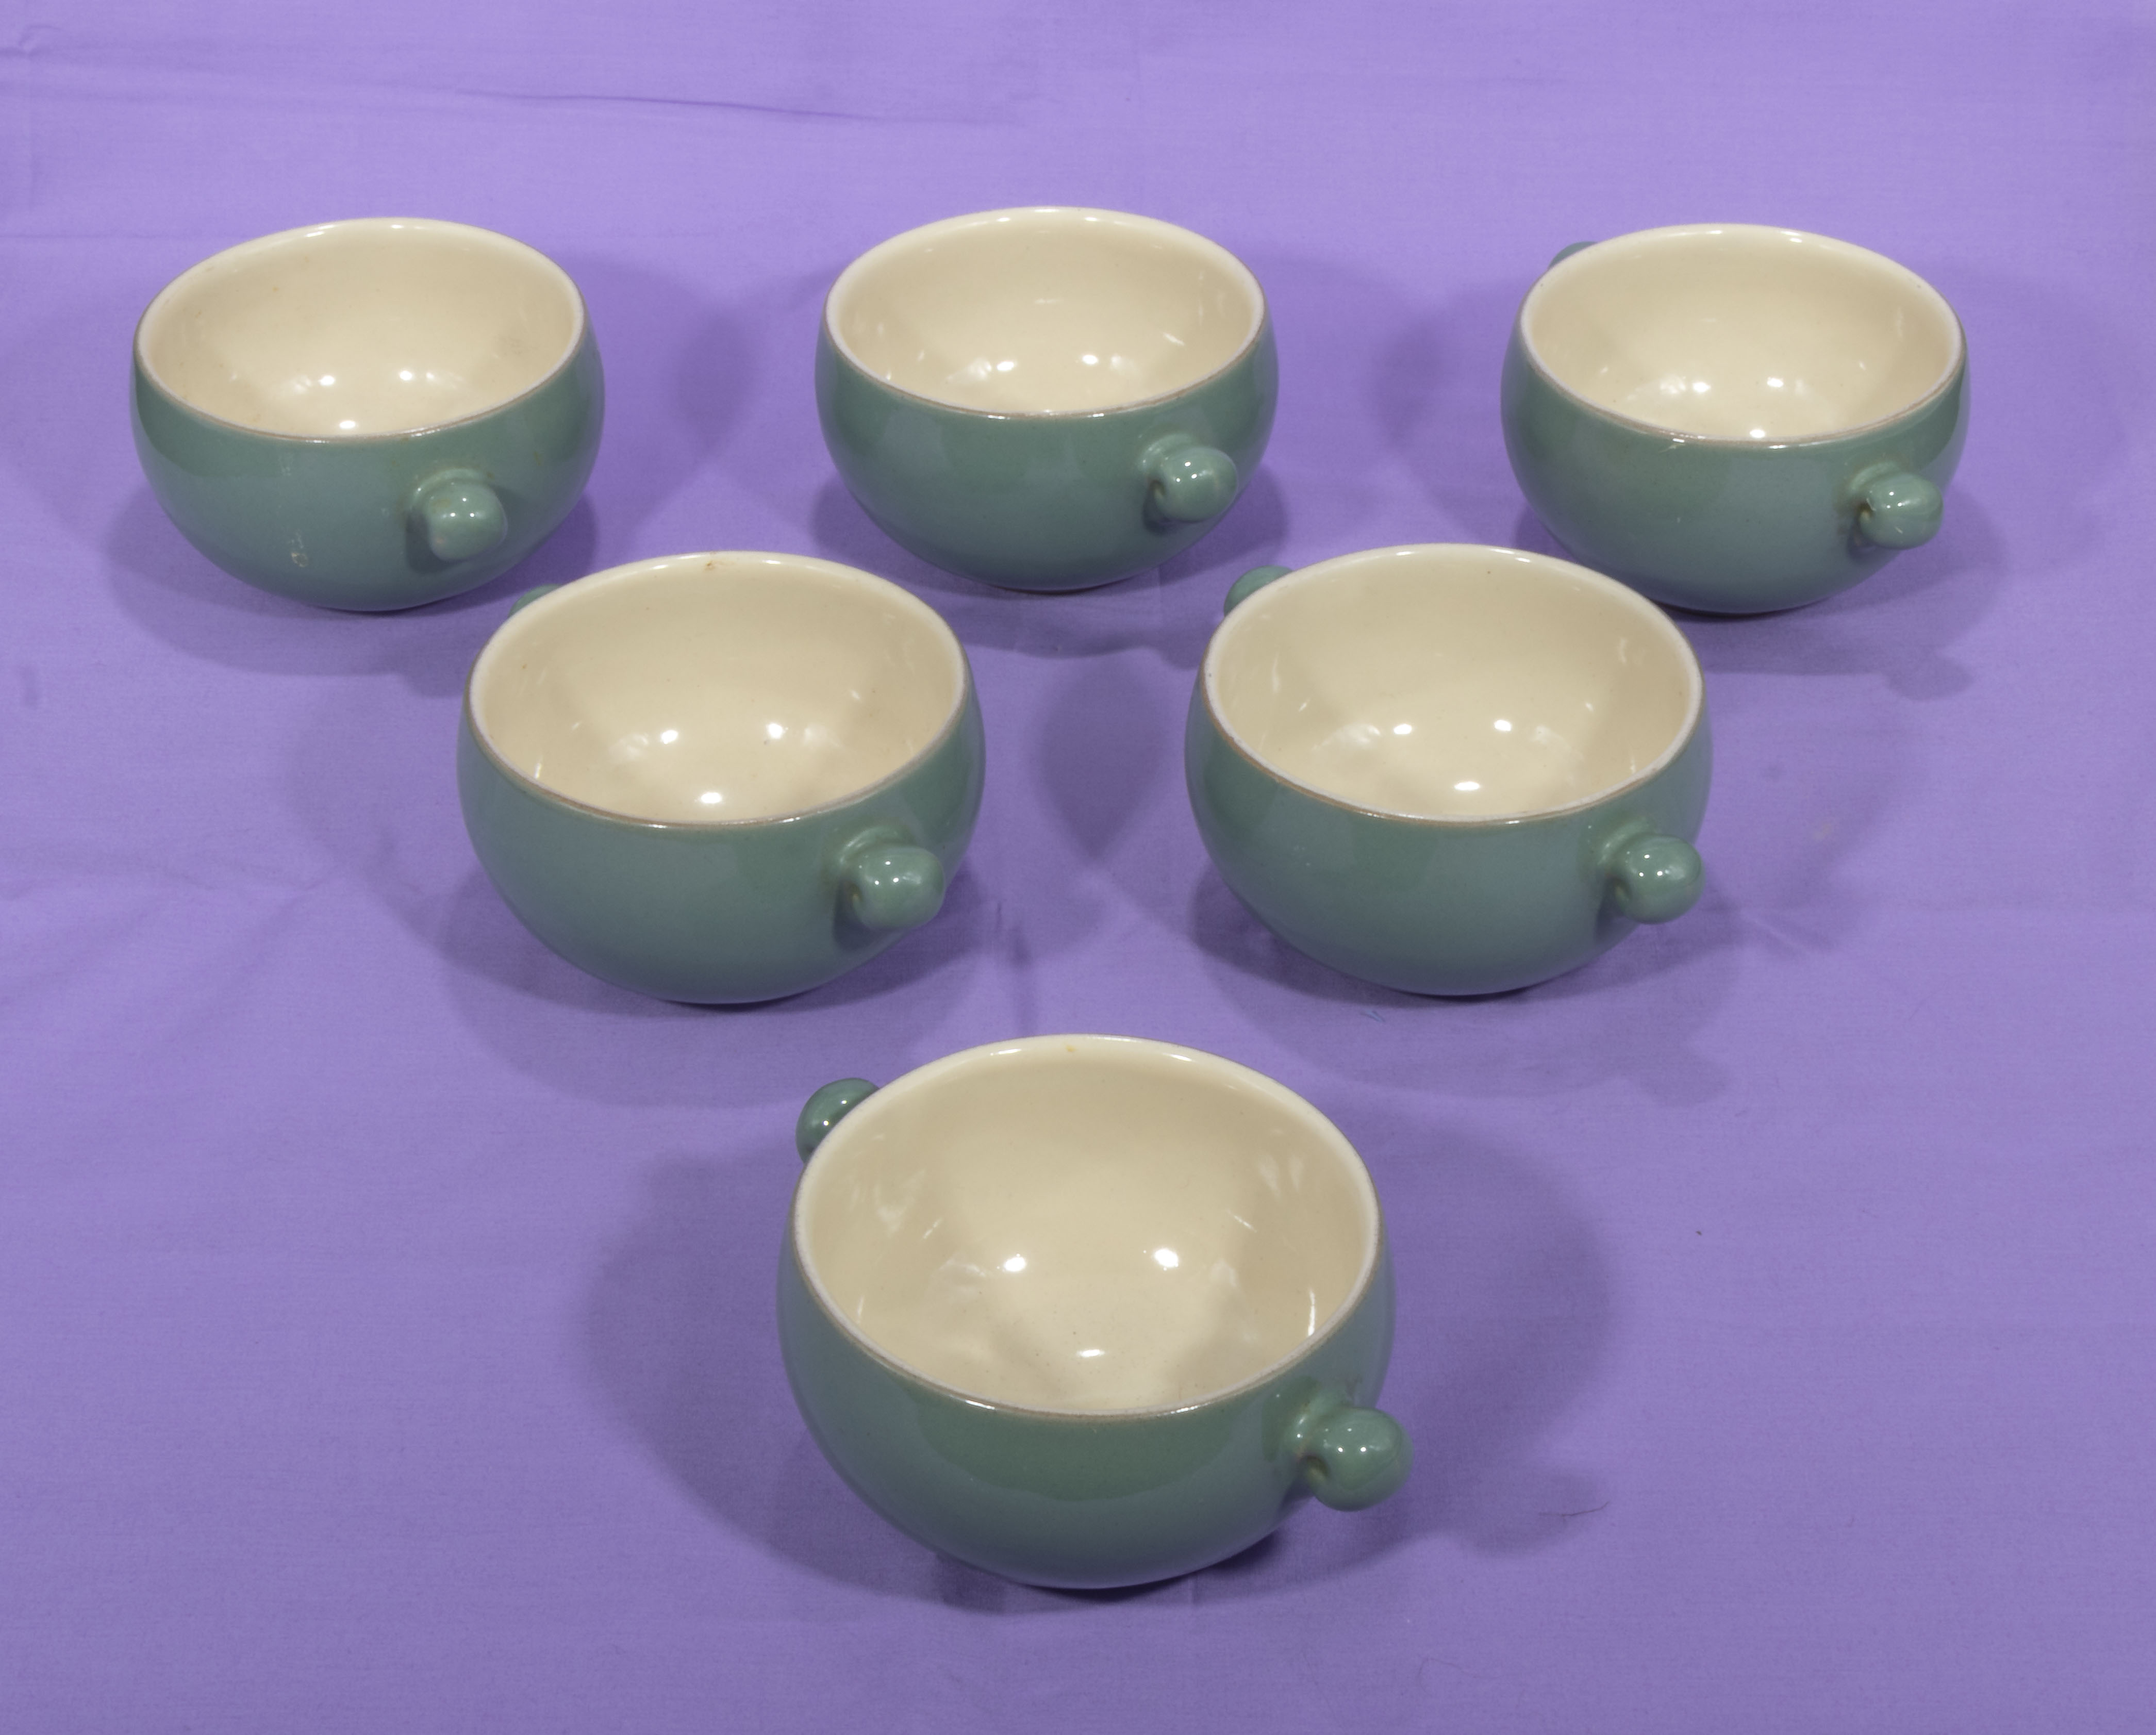 Six Denby soup bowls